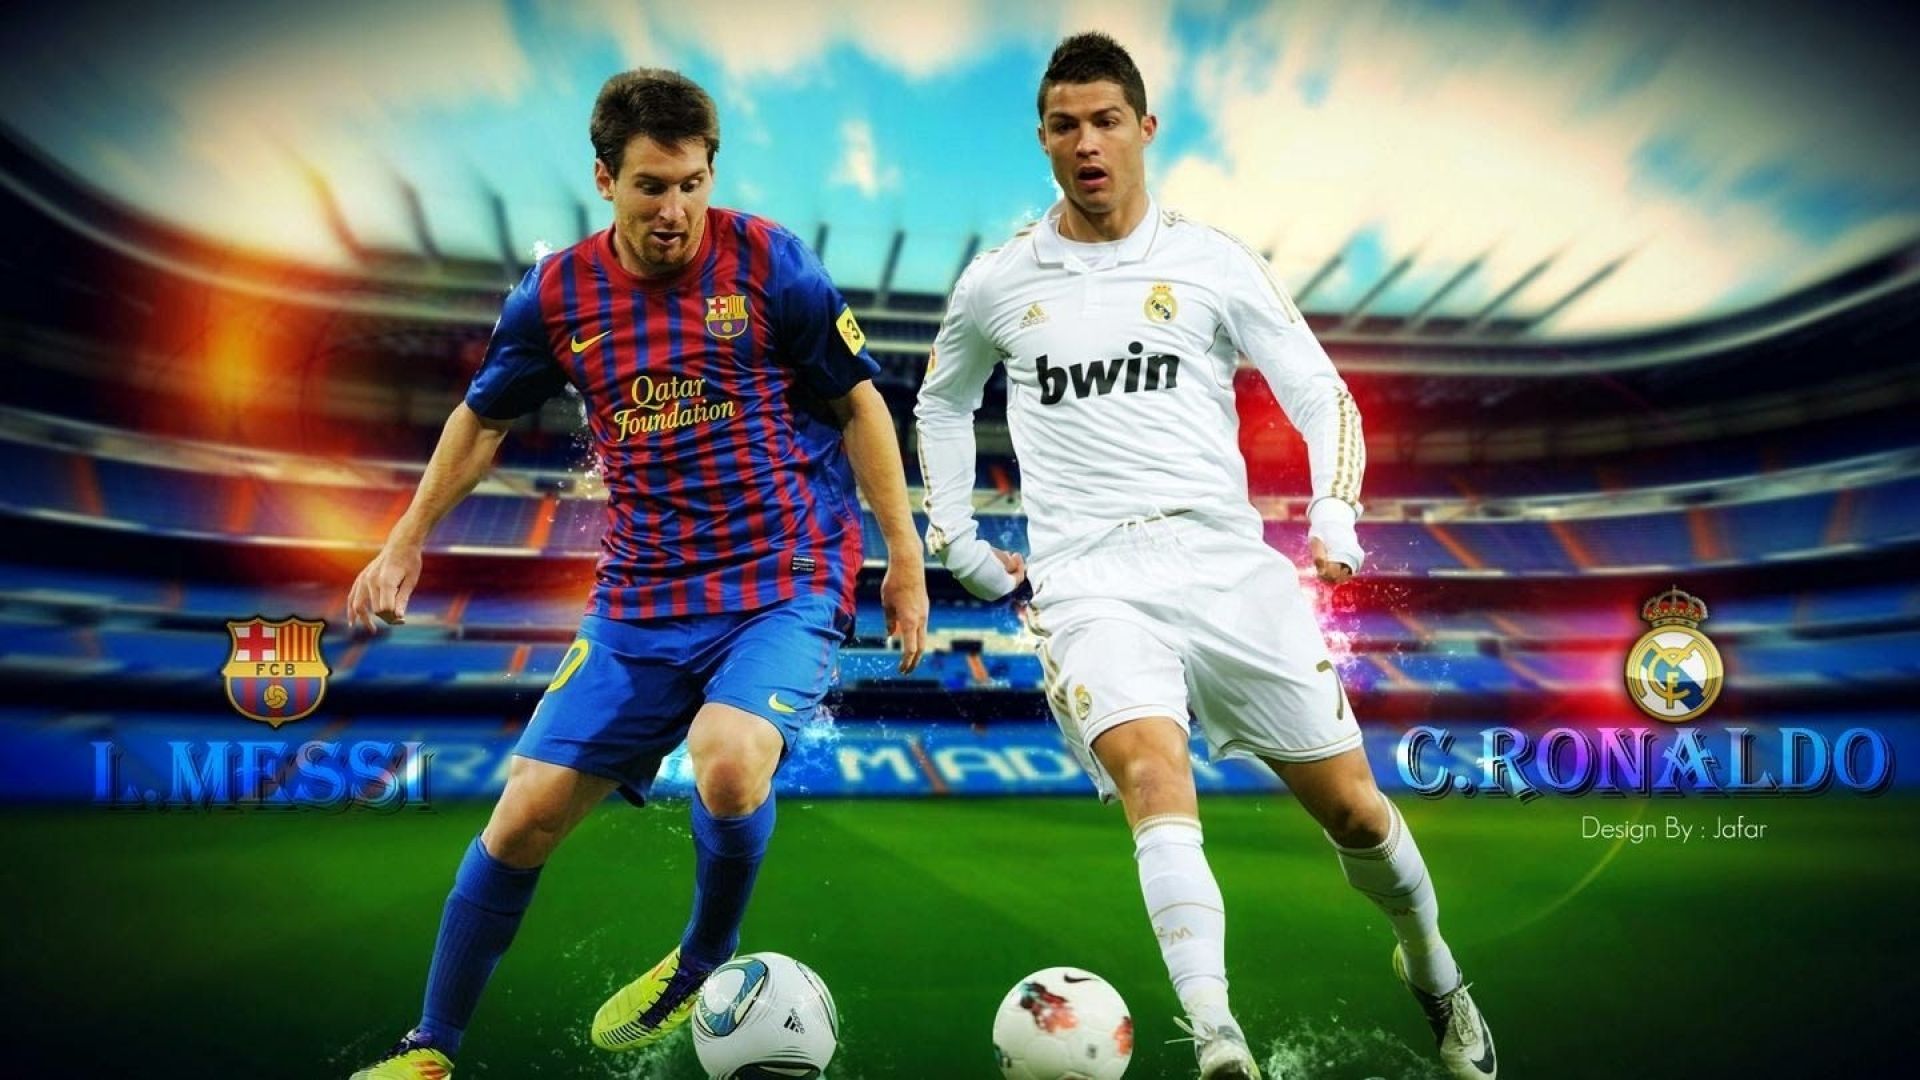 Messi And Ronaldo Wallpaper Soccer